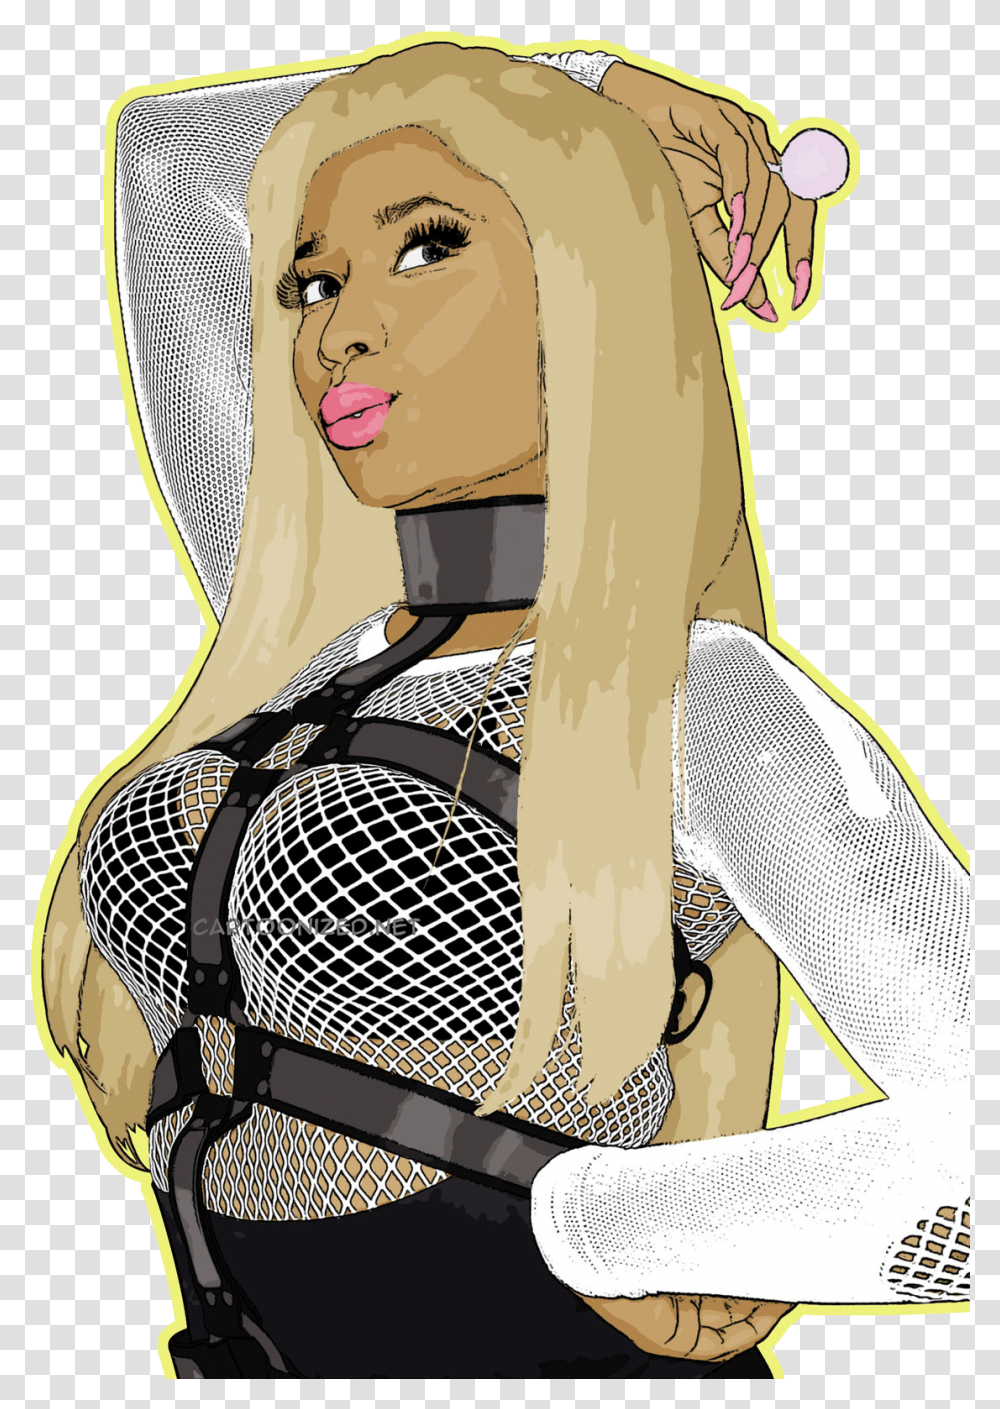 Nicki Minaj Image Download Cartoon Pictures Of Nicki Minaj, Female, Accessories, Armor Transparent Png